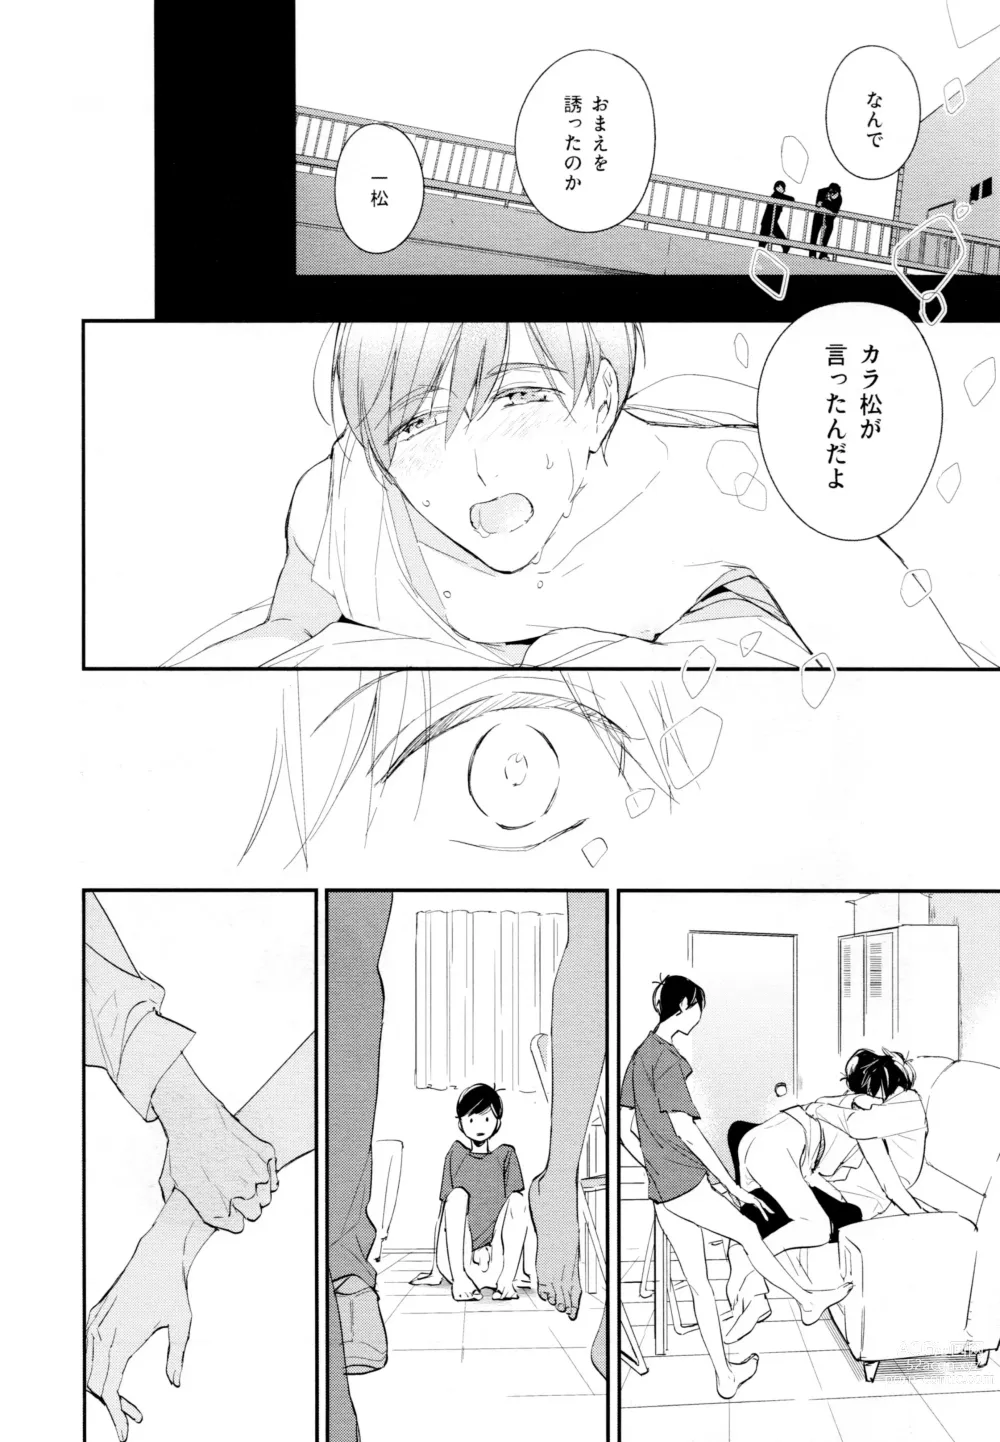 Page 79 of doujinshi Hikari ni Tsuite